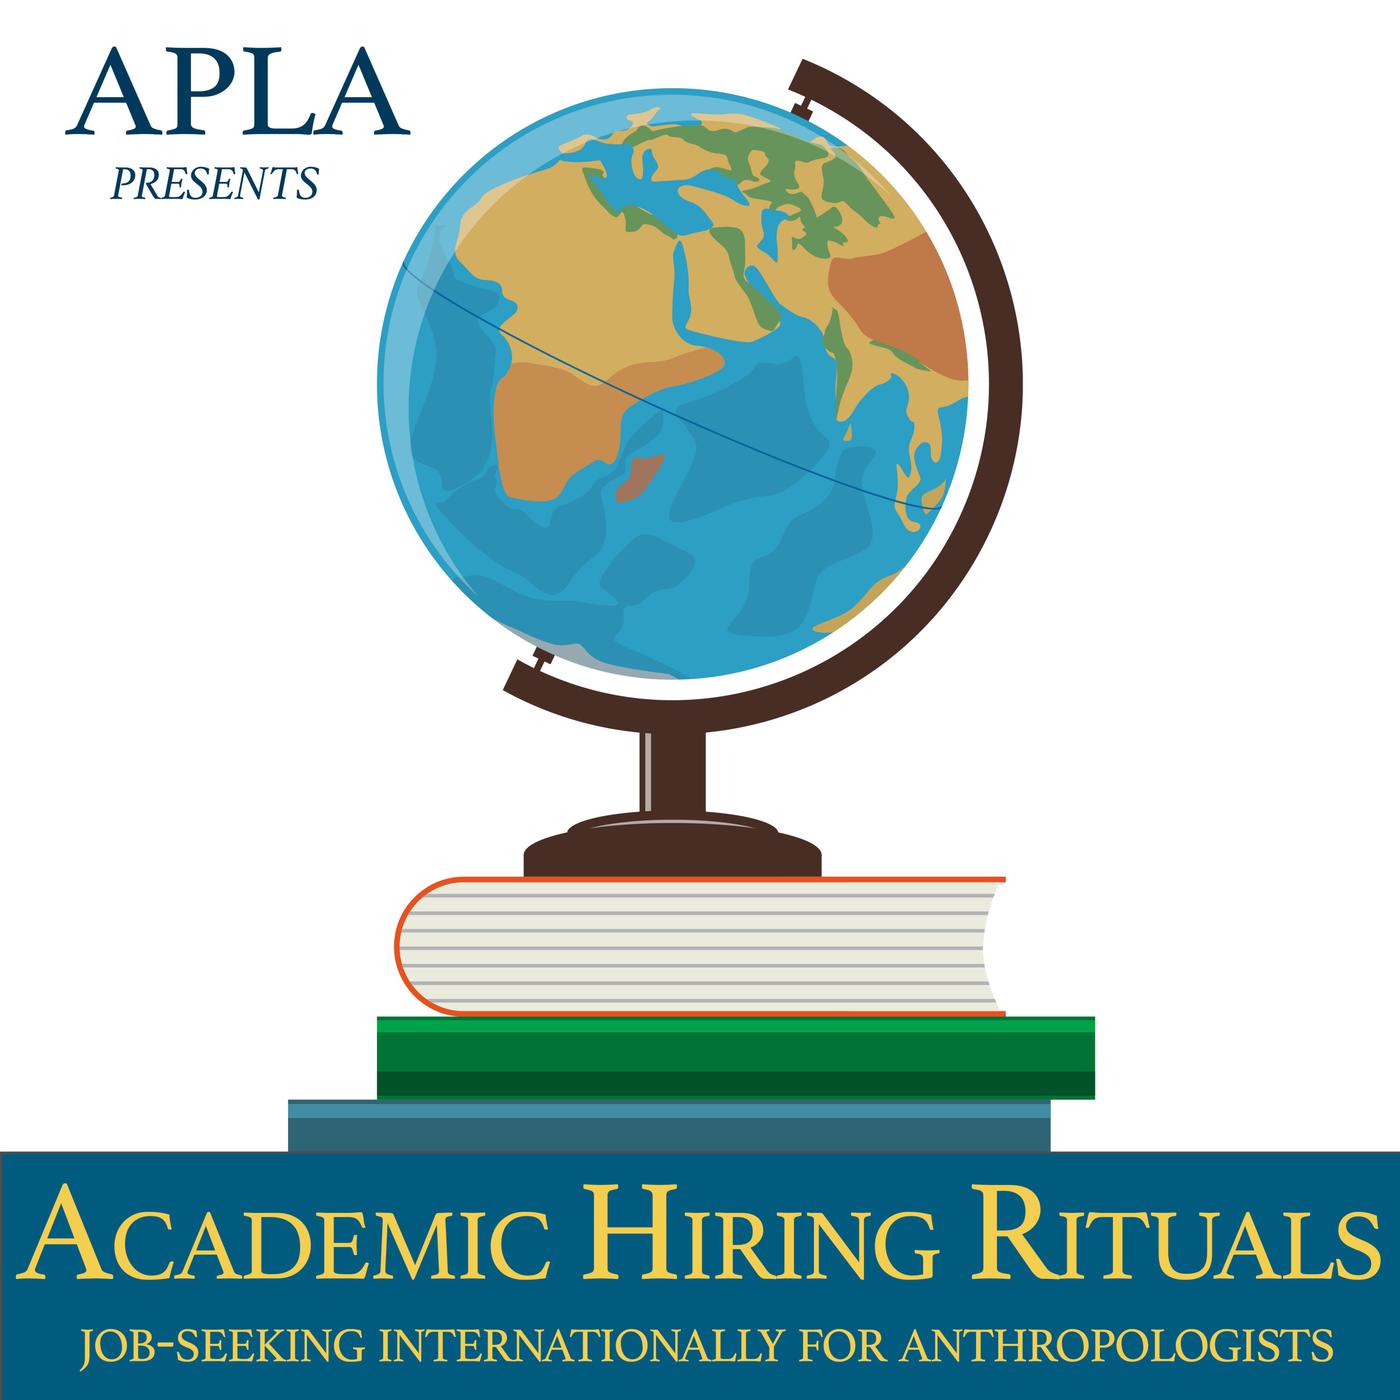 APLA presents Academic Hiring Rituals: Job-Seeking Internationally for Anthropologists